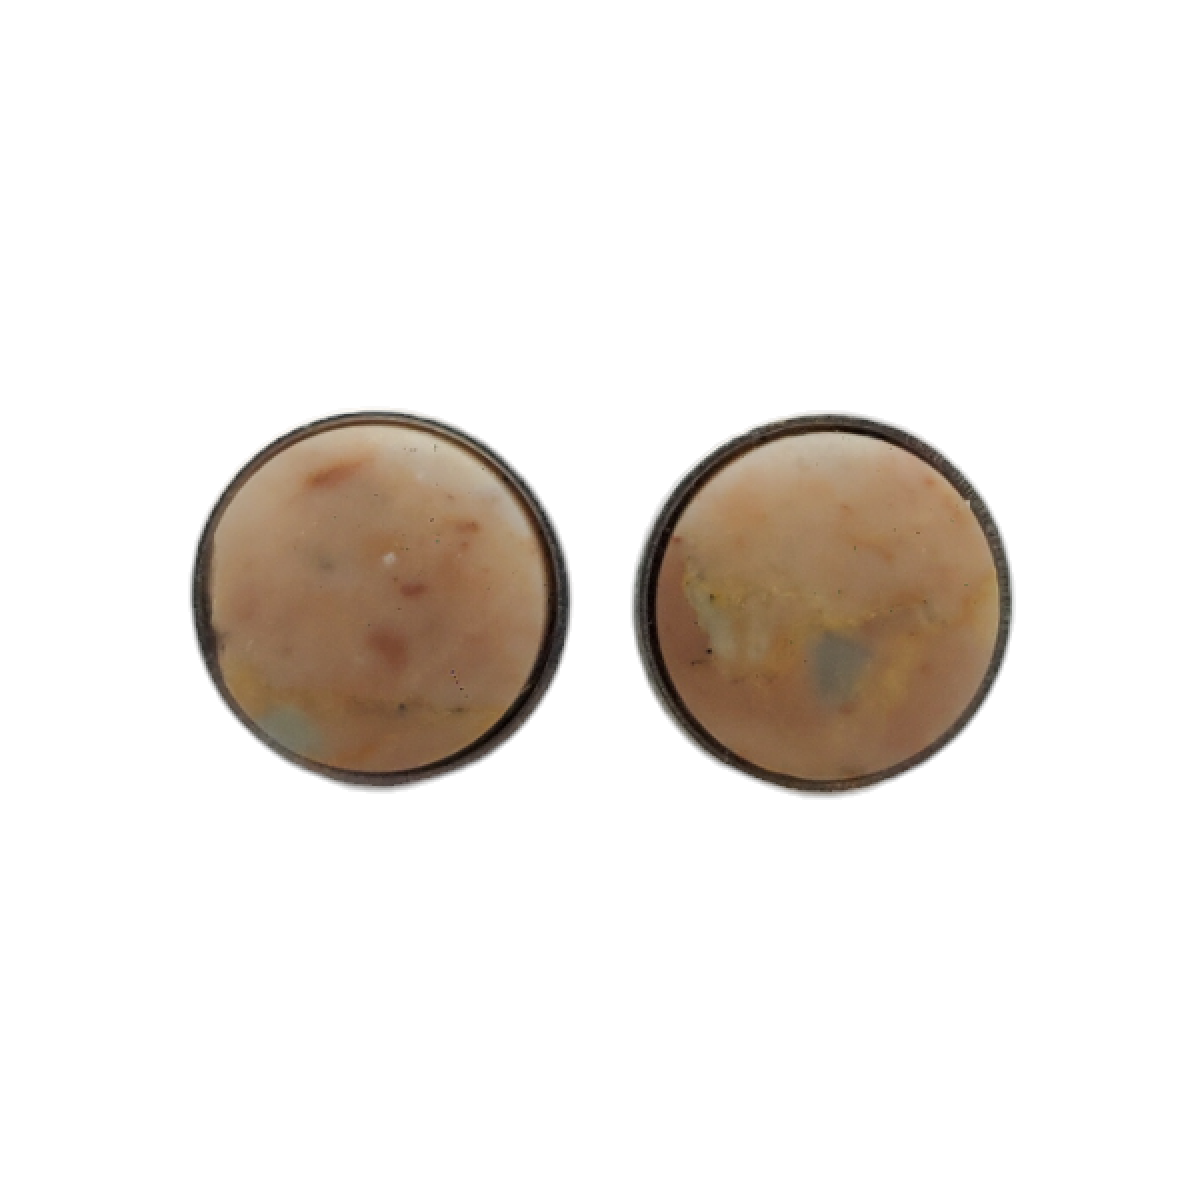 marmo-sassalbo-marble-marmor-orecchini-earrings-ohrringe